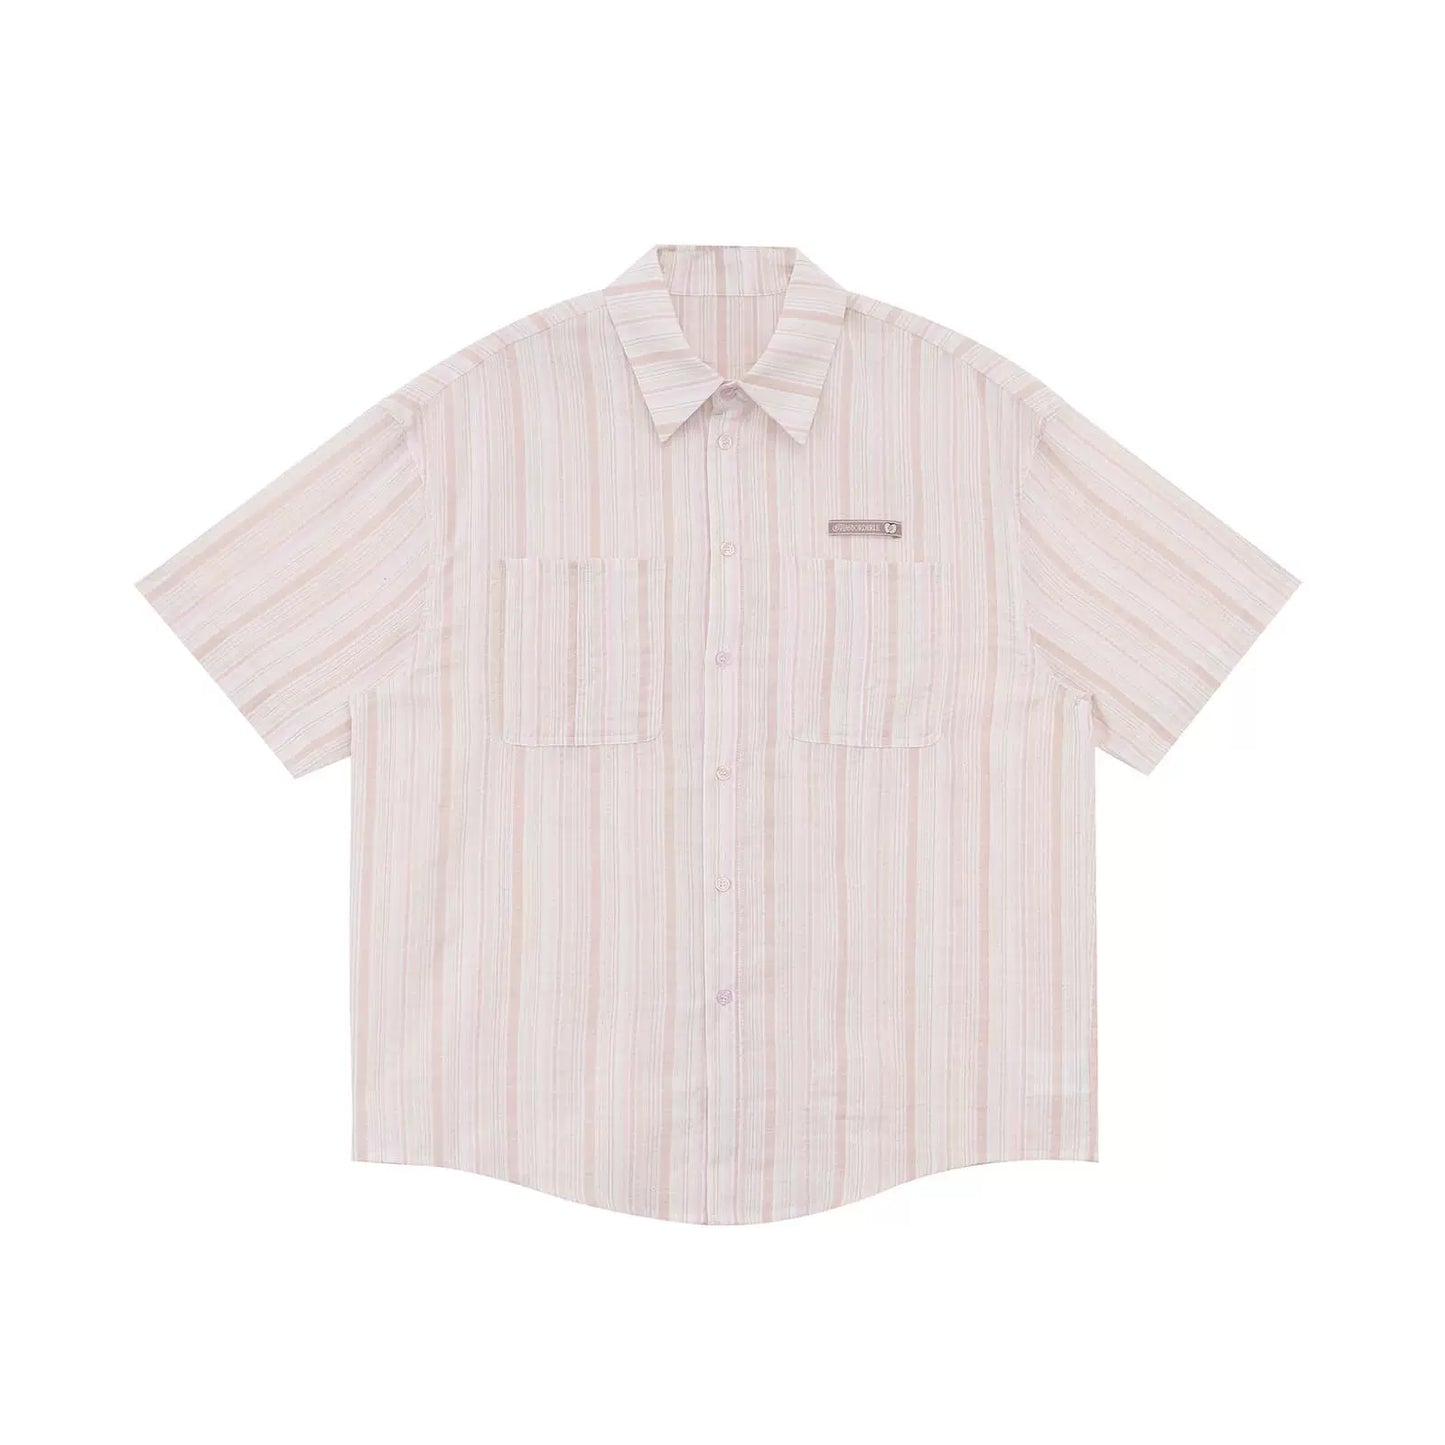 Vertical Stripe Colorful Button Shirt